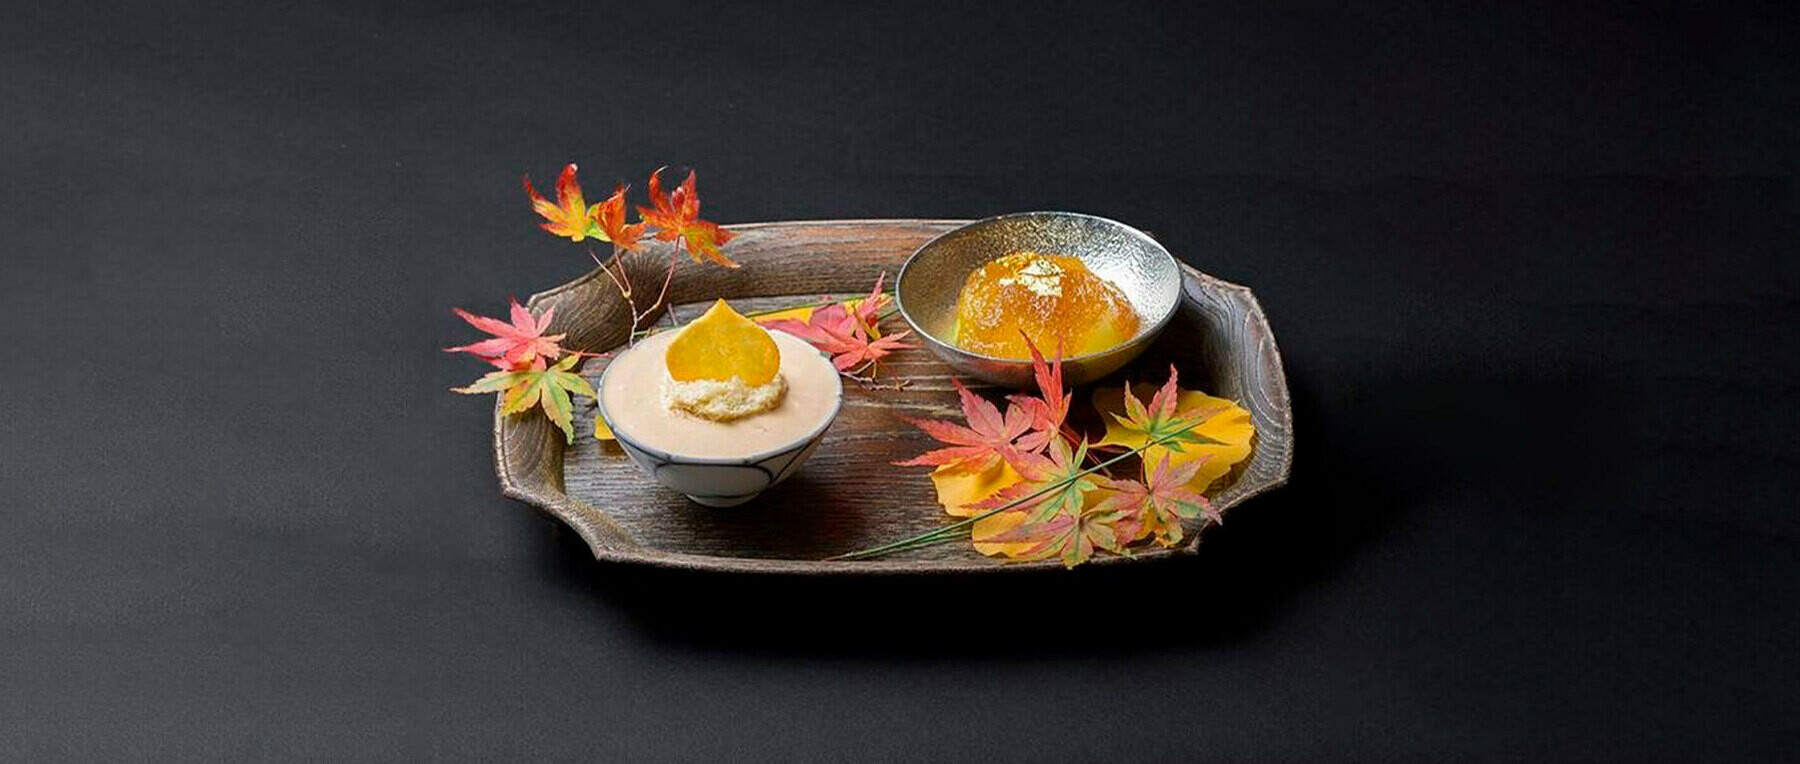 Japanese Cuisine Ensui's images7